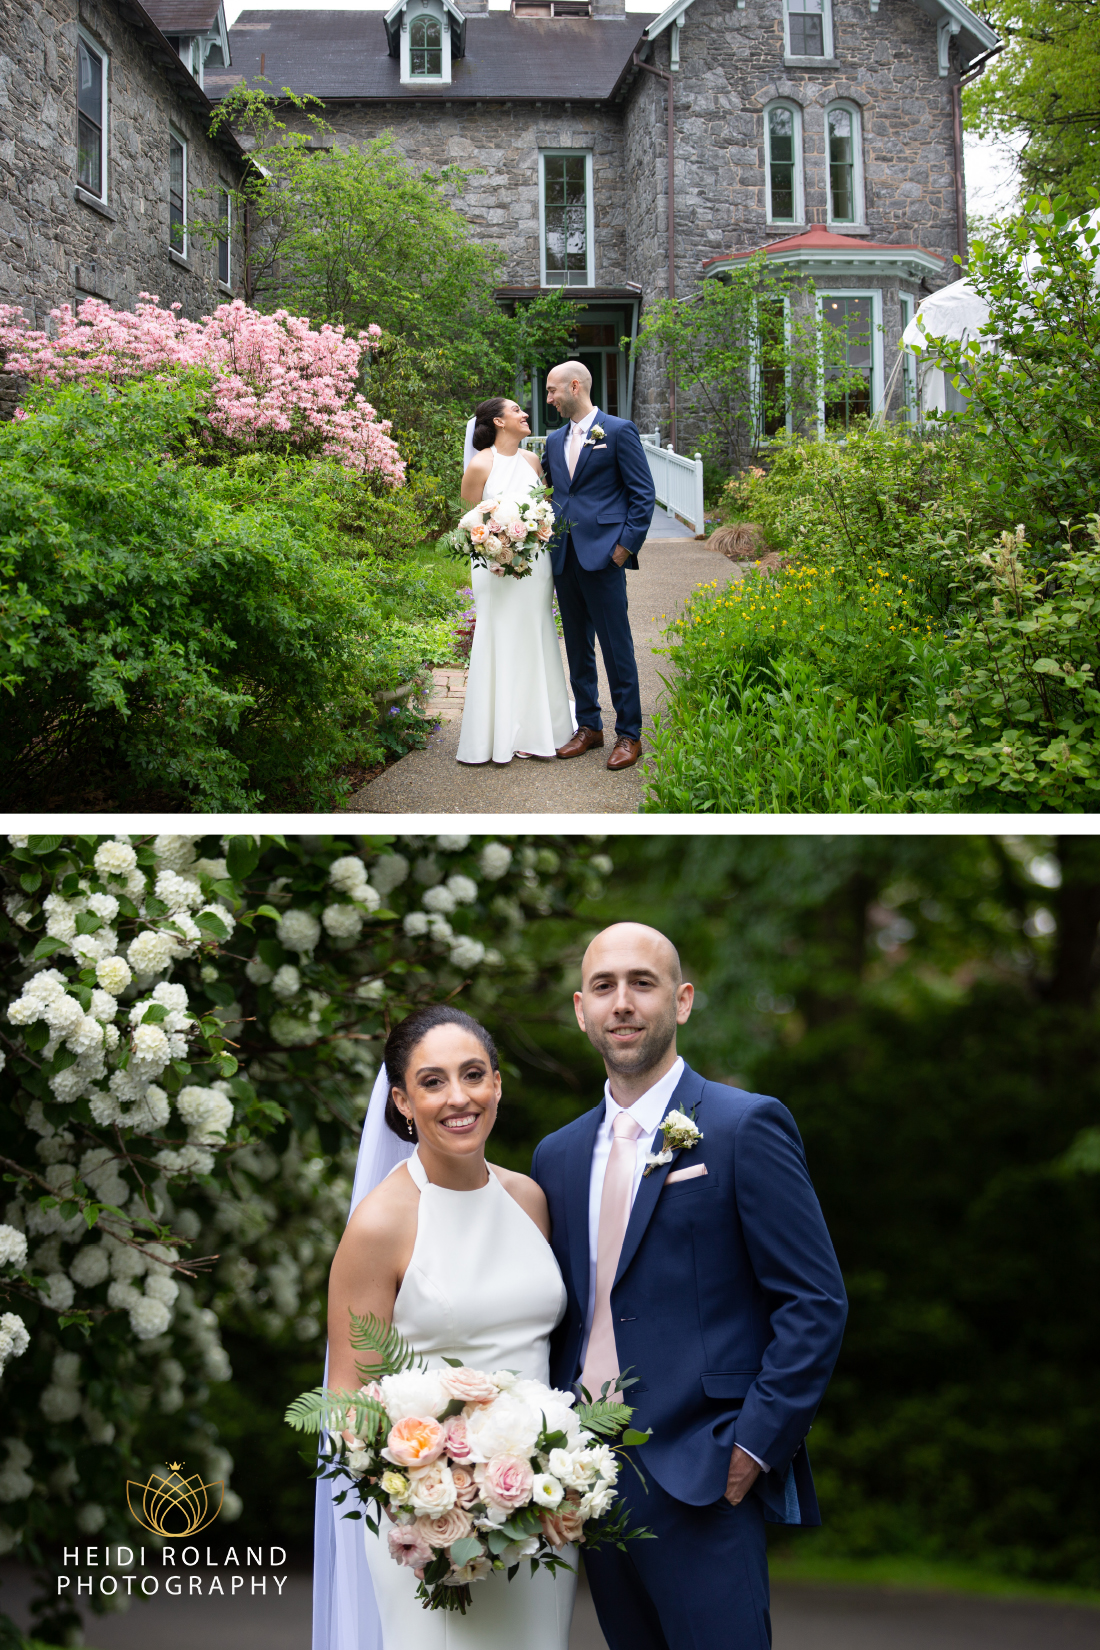 Couple on their wedding day in the Portico Garden at Awbury Arboretum